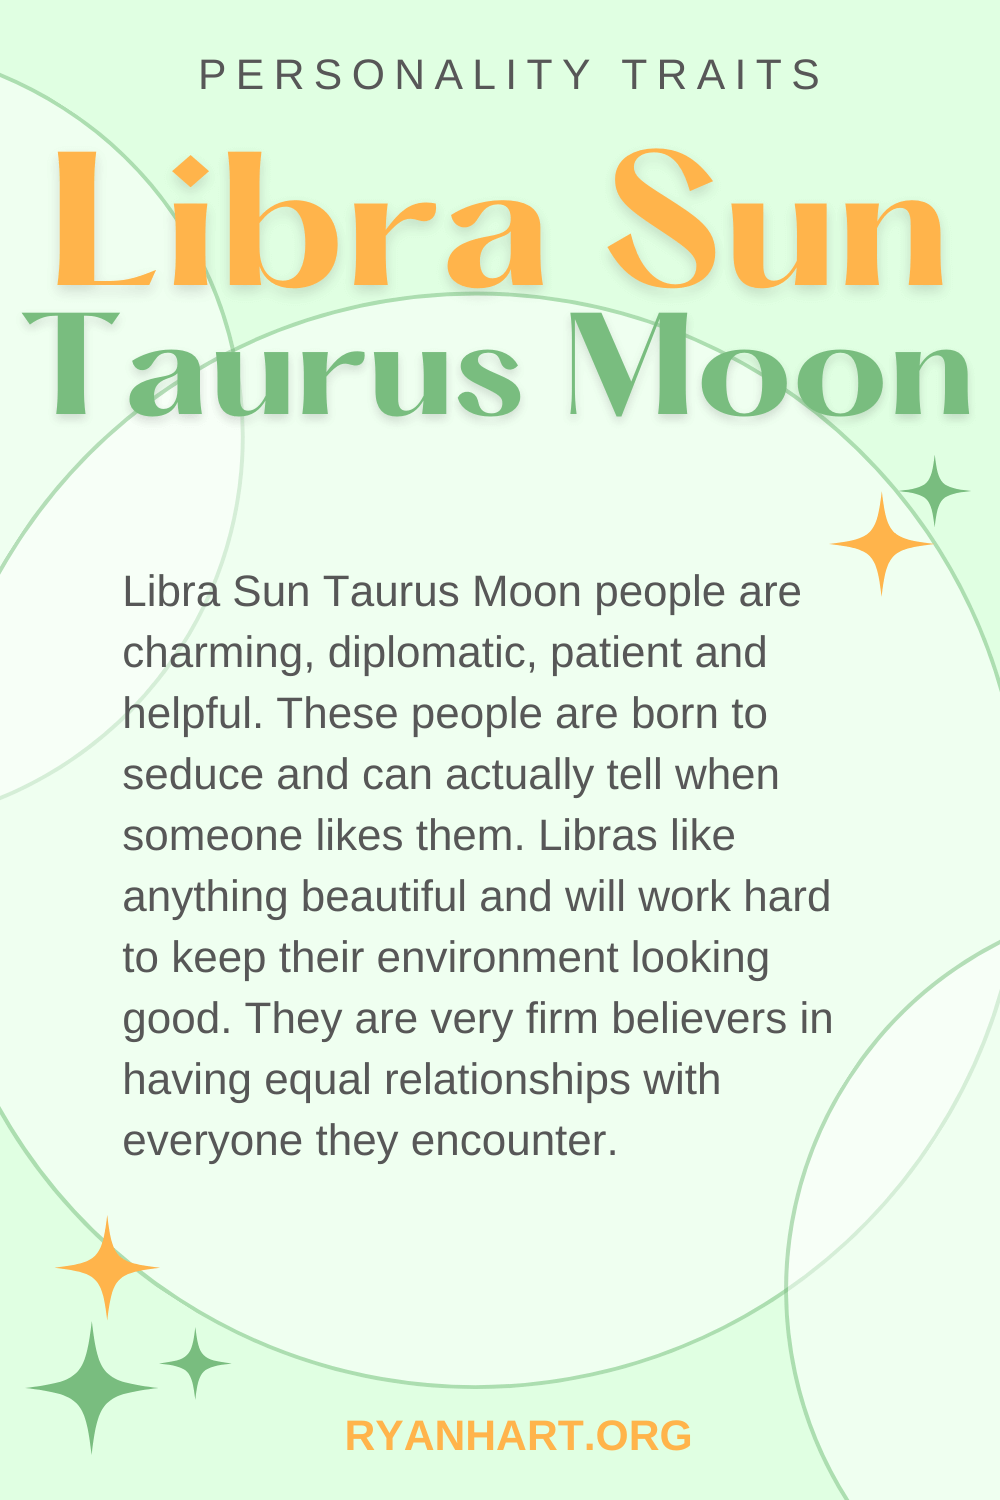 Libra Sun Taurus Moon Description